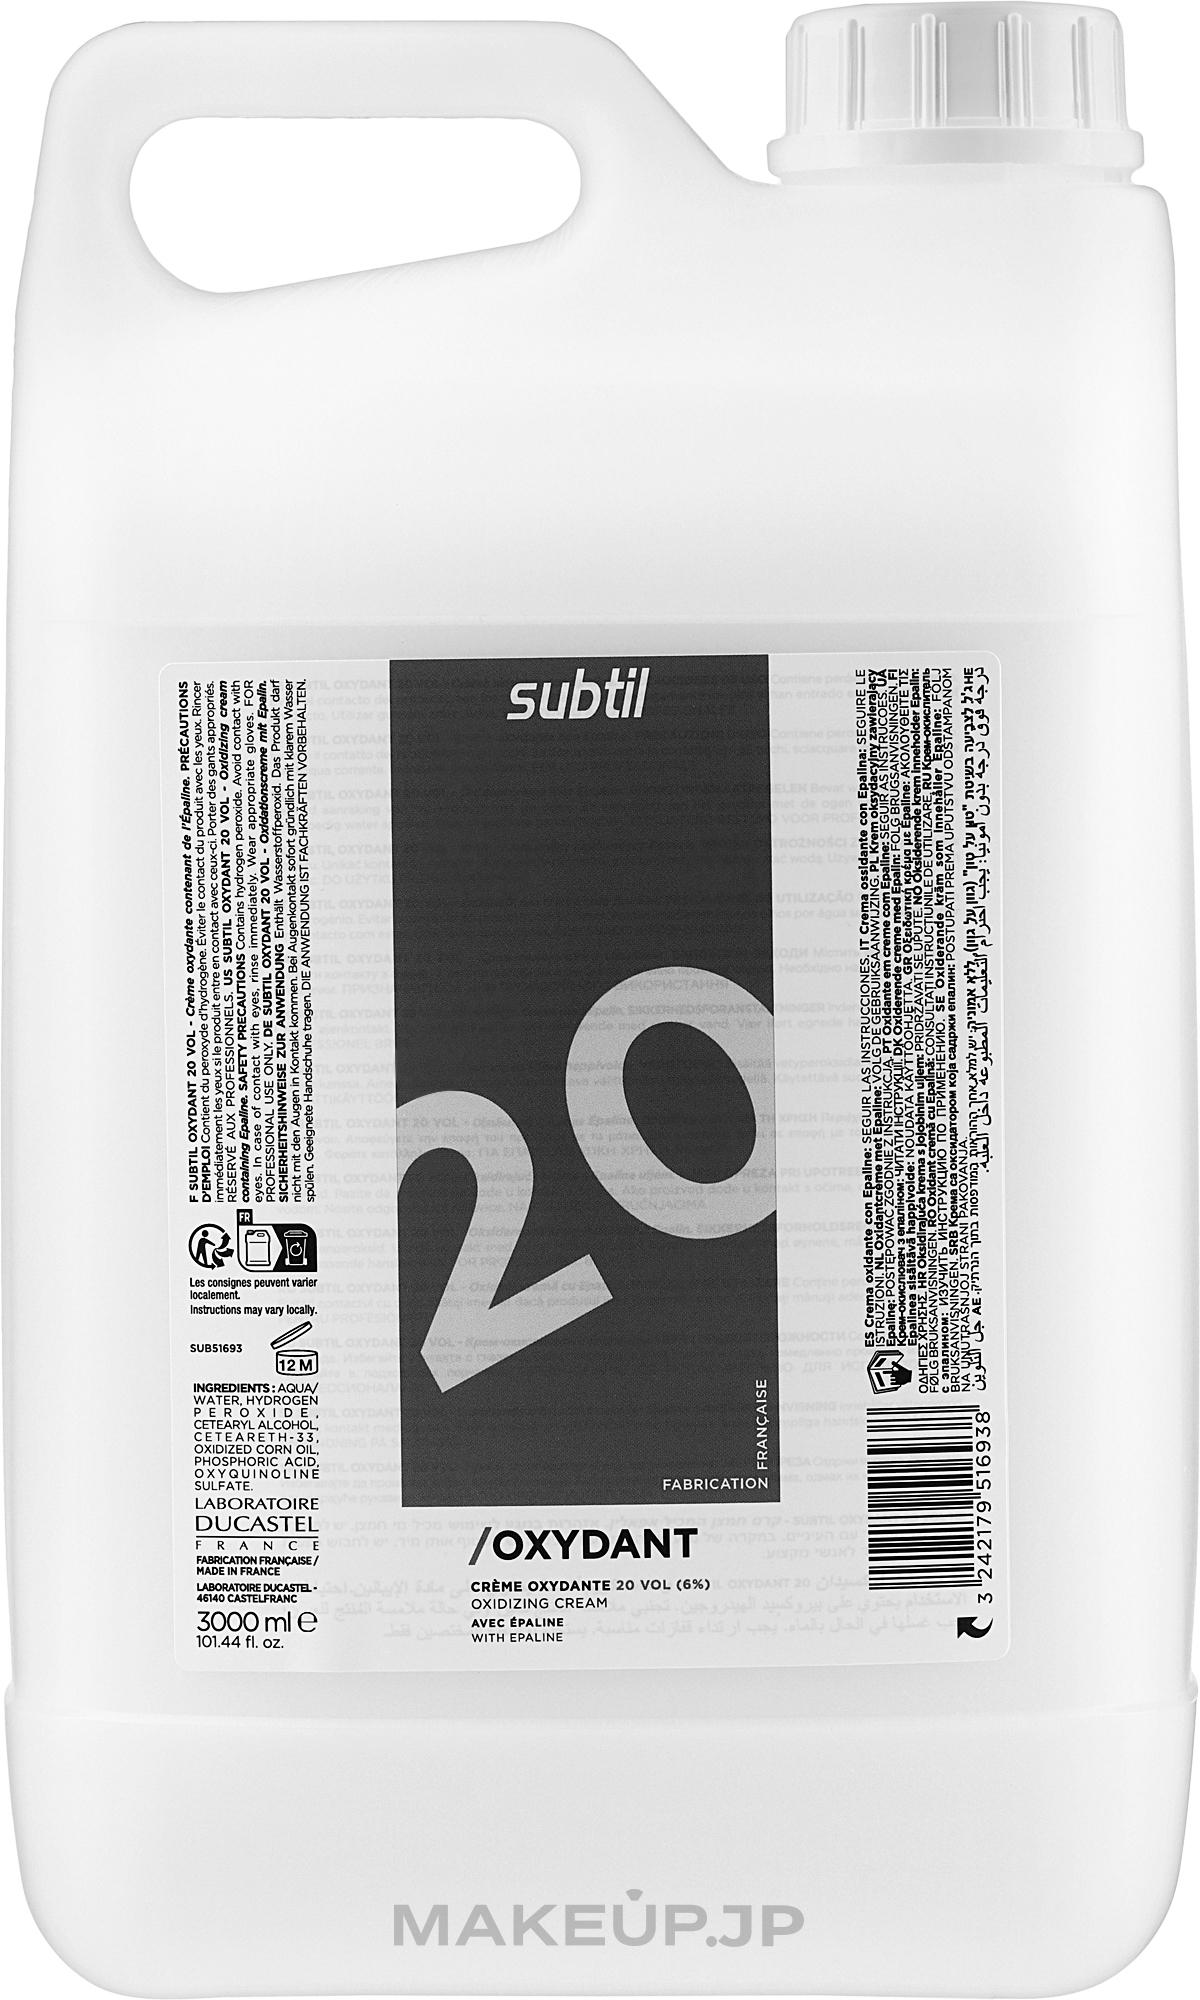 Oxidizer "Subtil OXY" 6% - Laboratoire Ducastel Subtil OXY — photo 3000 ml